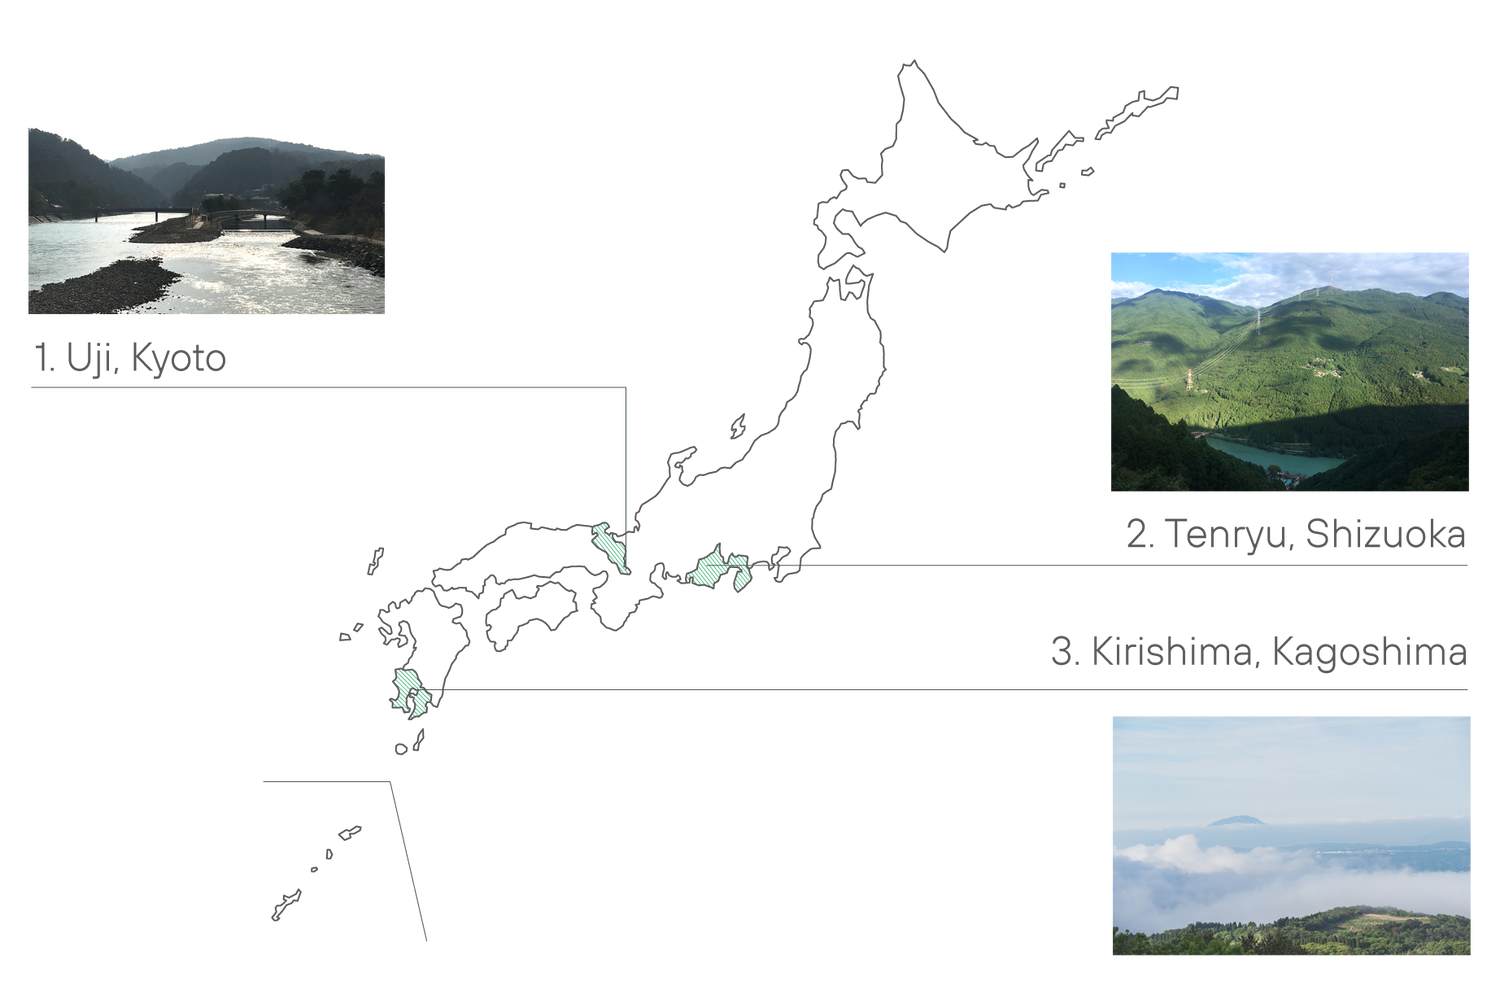 A map of Japan, with three landscape photos of Kyoto, Shizuoka and Kirishima, adjacent to their locations